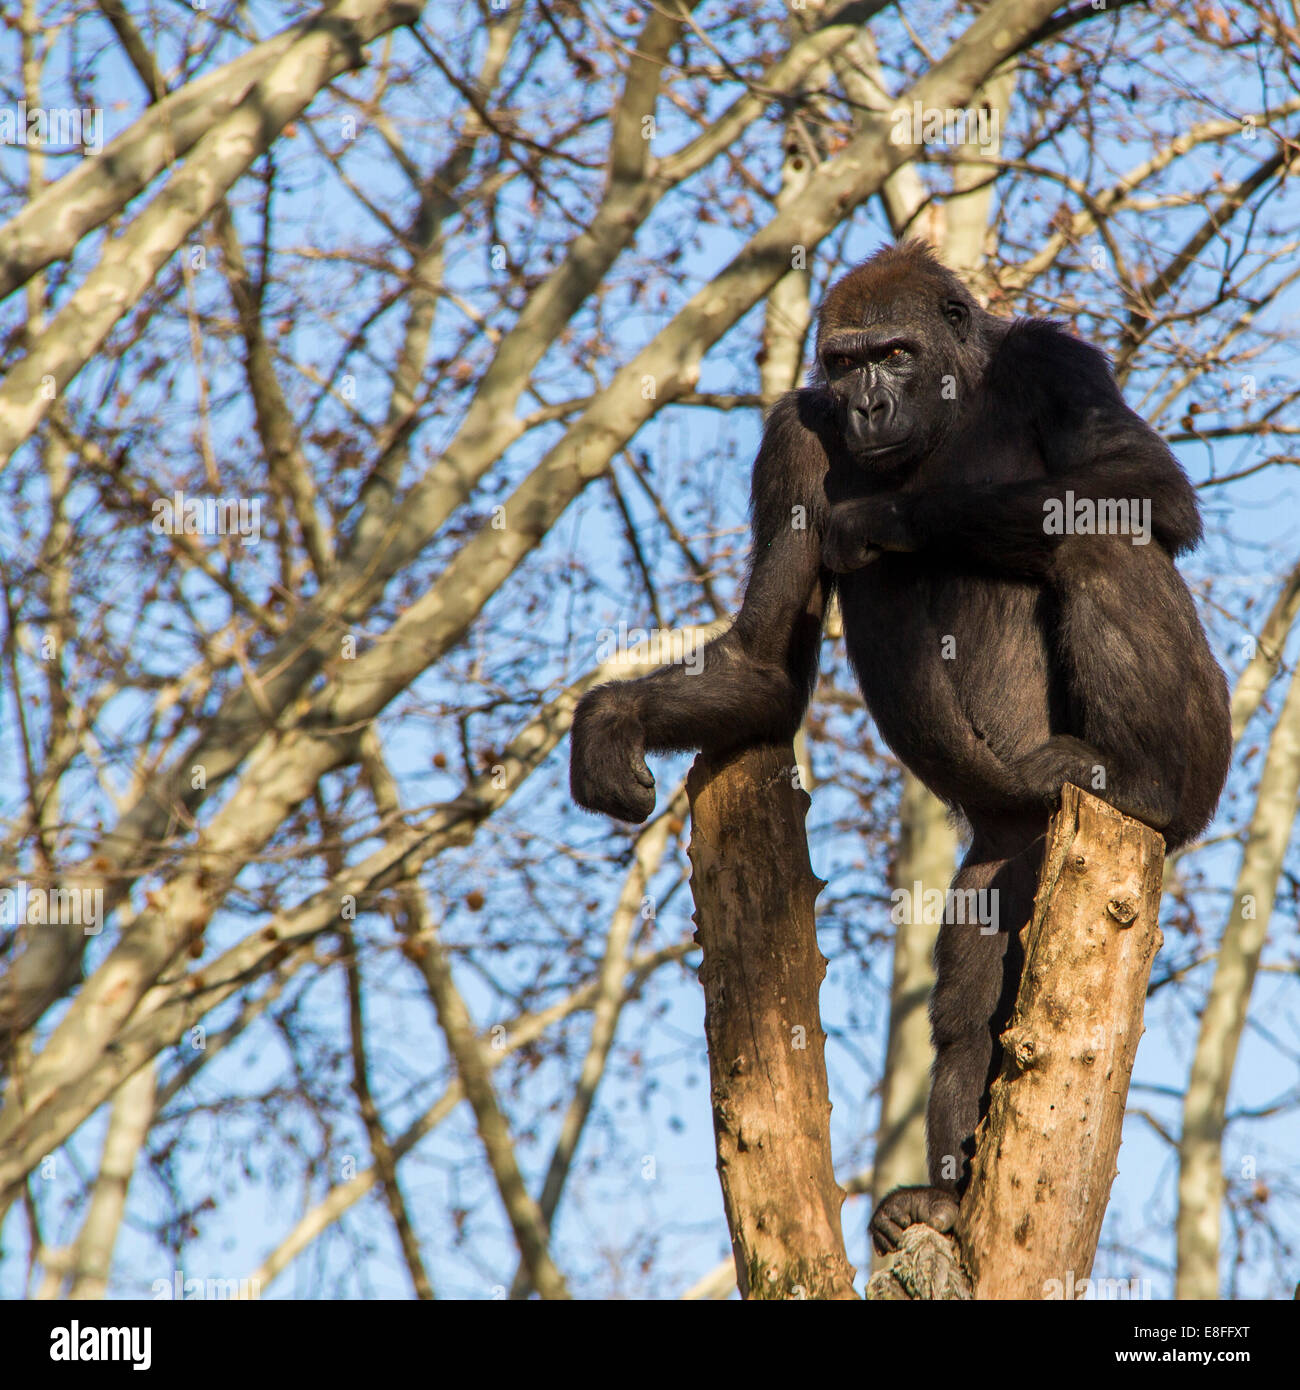 Gorilla sitting in a tree Stock Photo